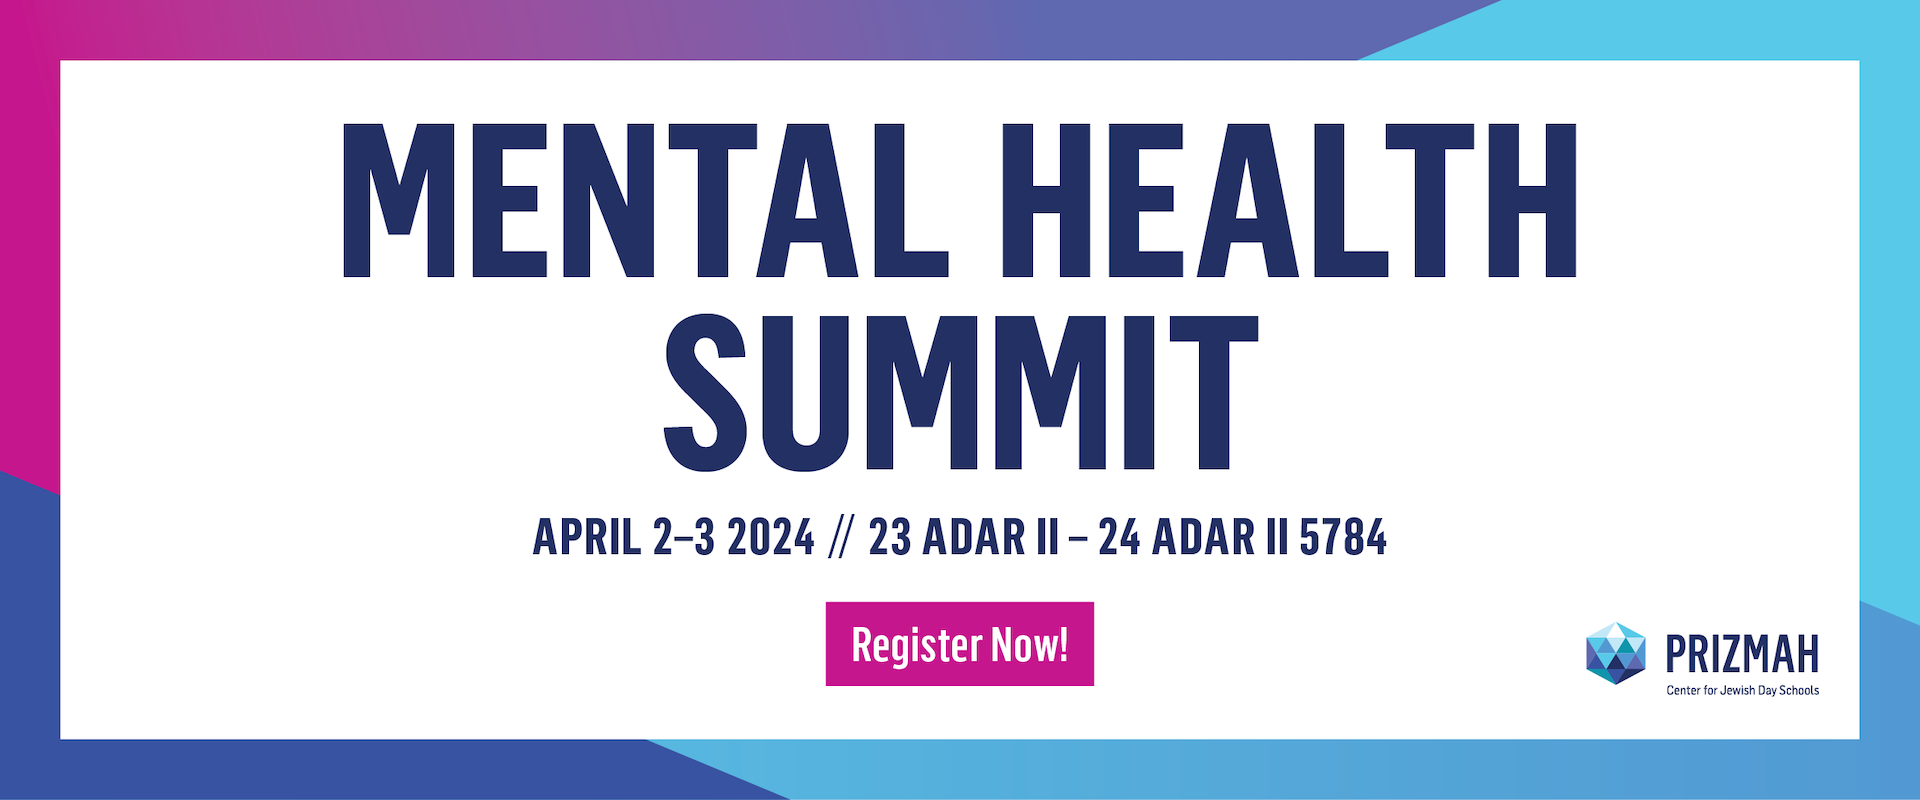 Mental Health Summit 2024 - Register Now